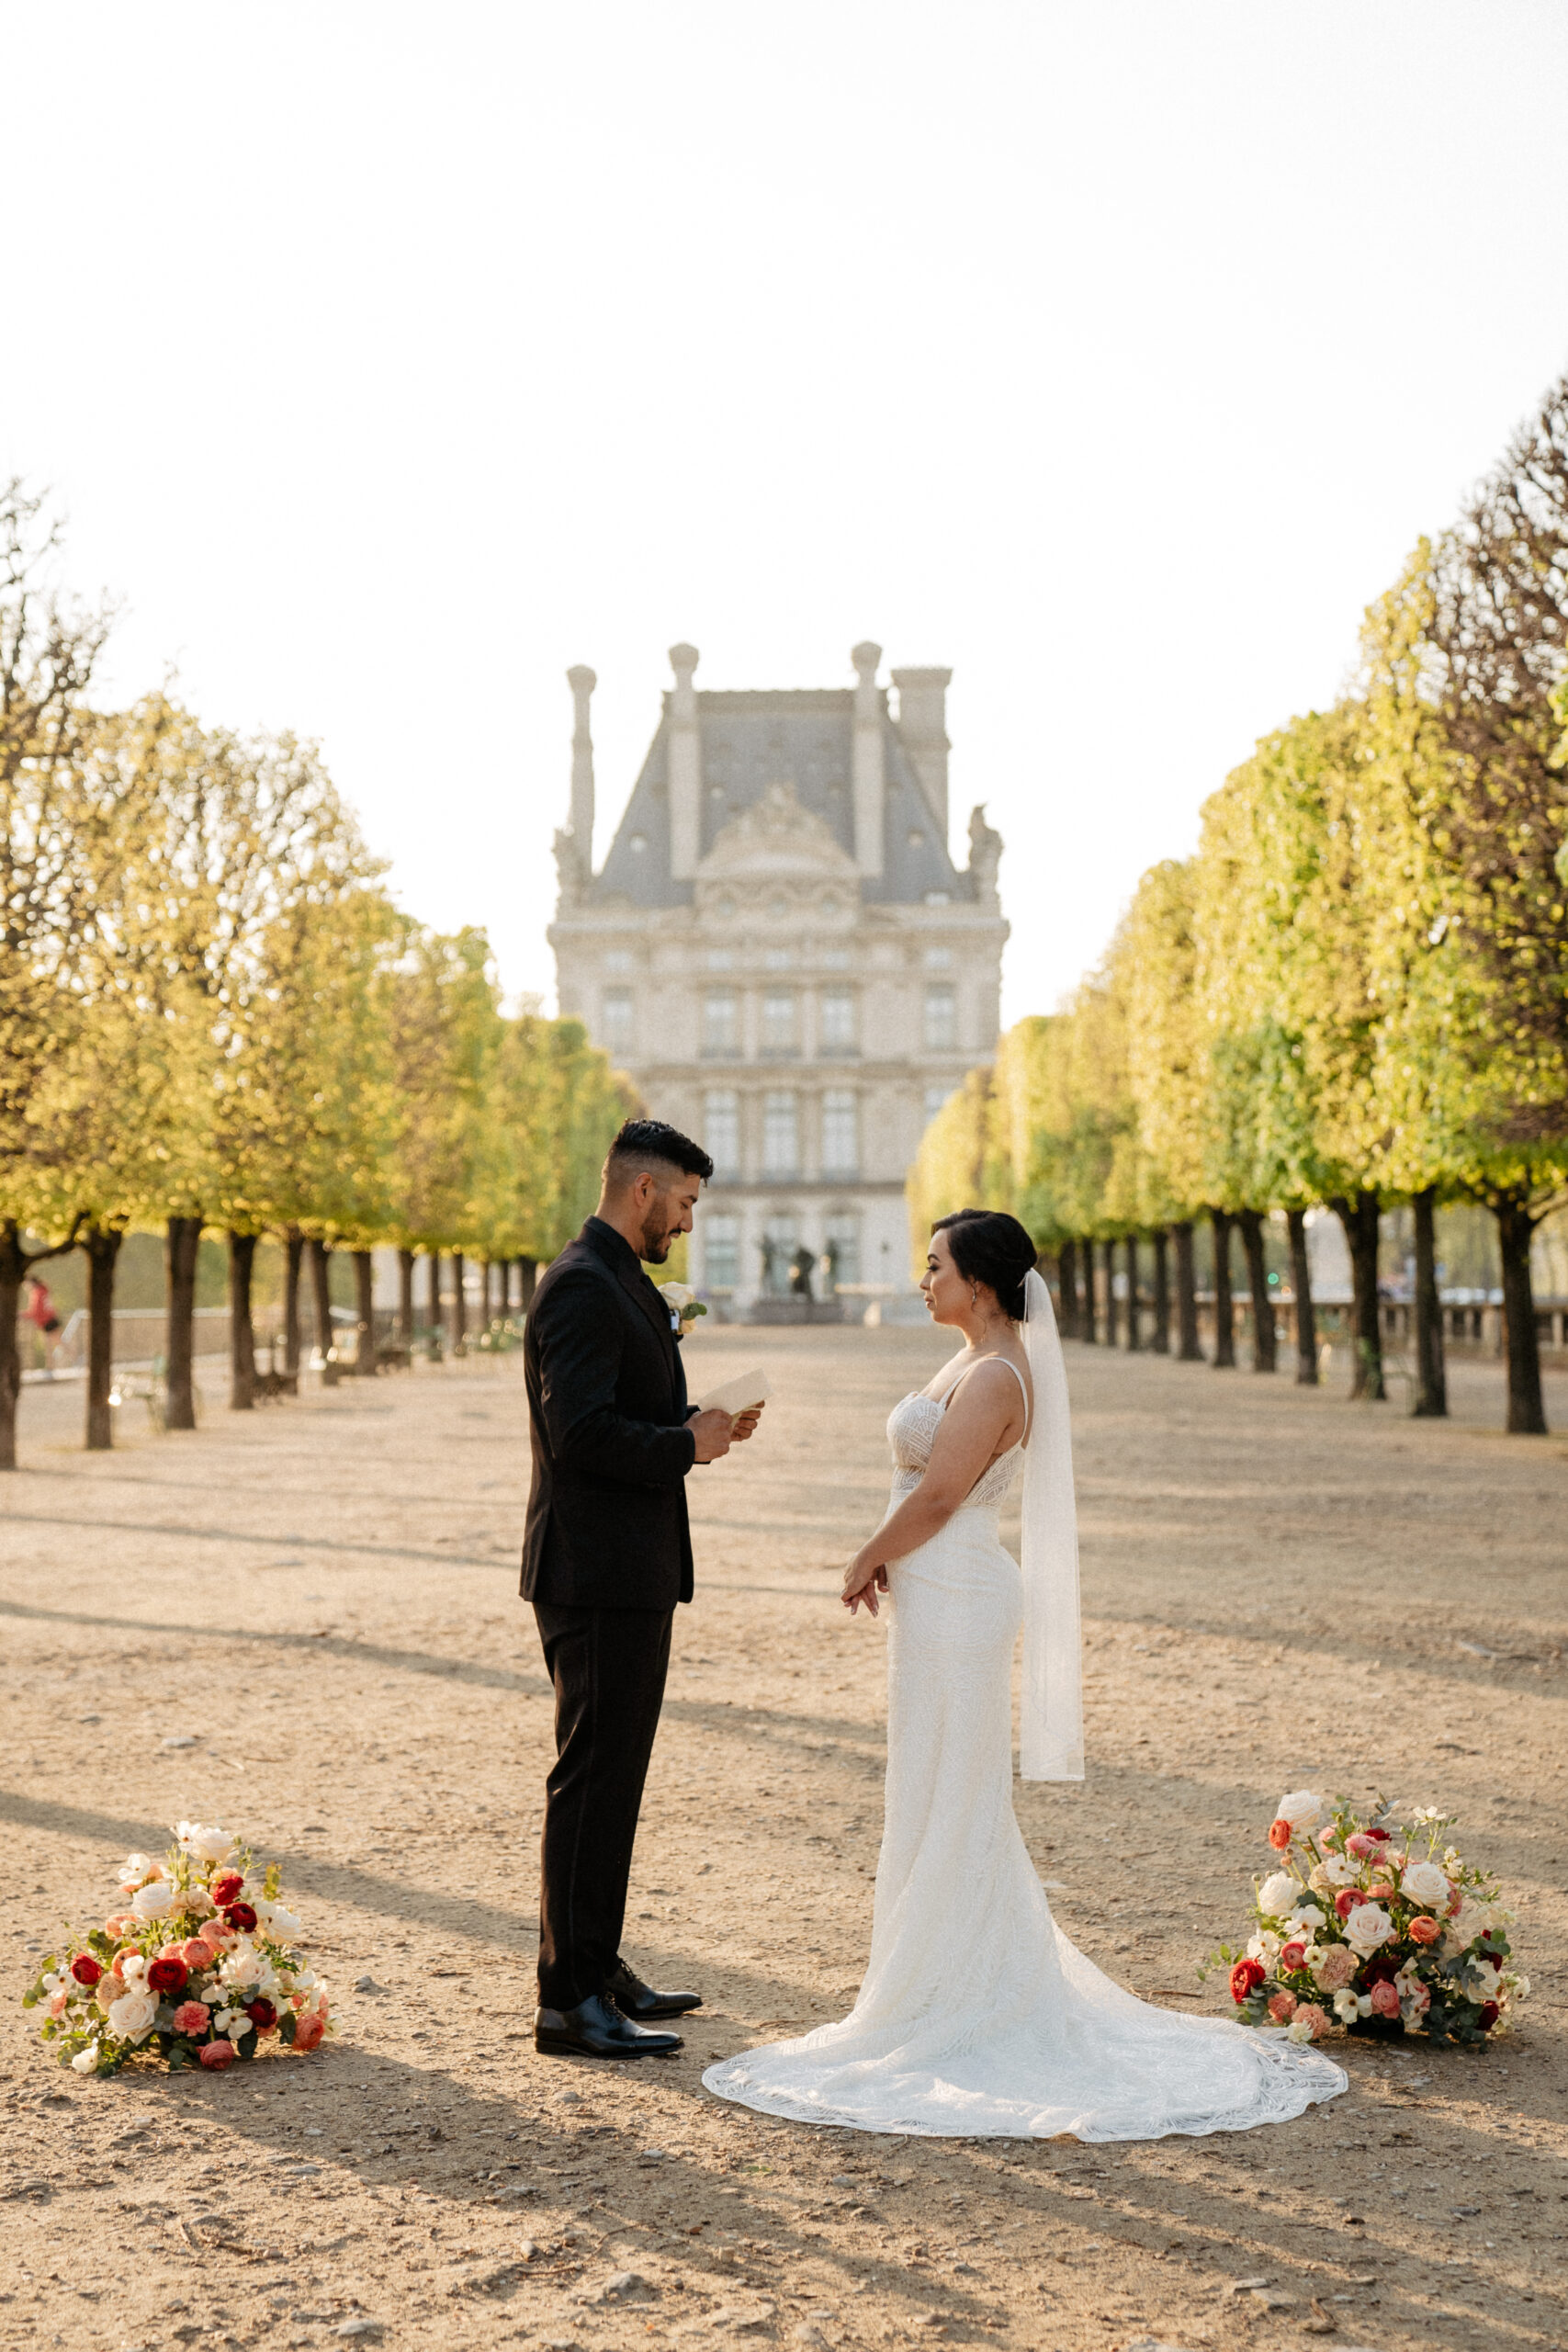 Best Elepement Ceremony Locations in Paris at the Tuileries Garden - Jardin des Tuileries